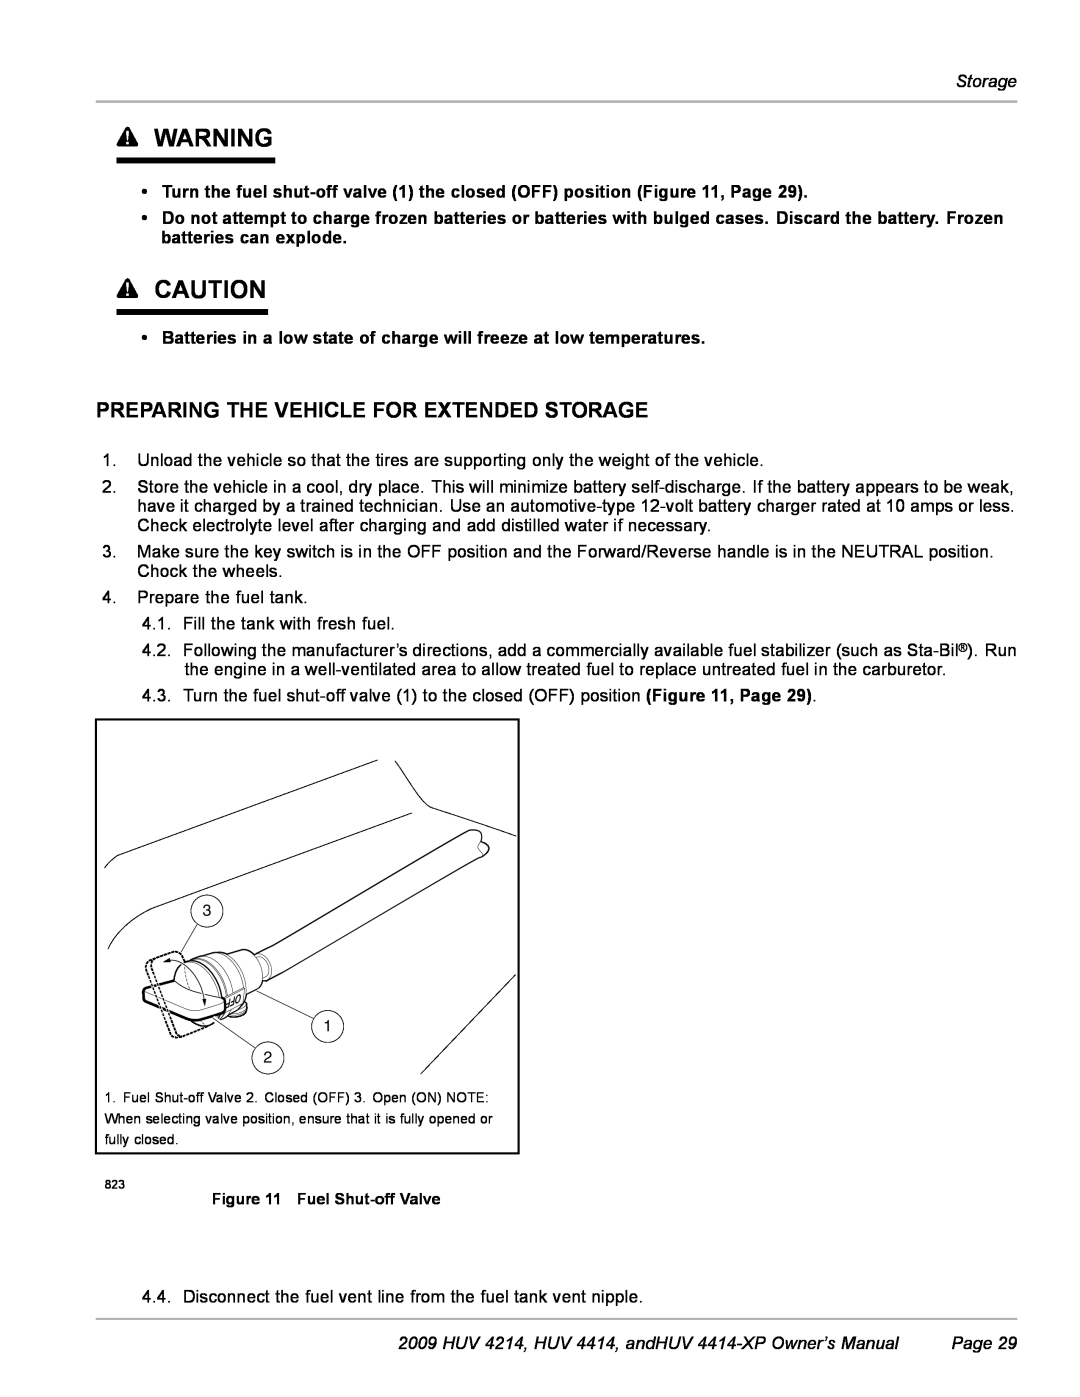 Husqvarna Preparing The Vehicle For Extended Storage, HUV 4214, HUV 4414, andHUV 4414-XP Owner’s Manual, Page 